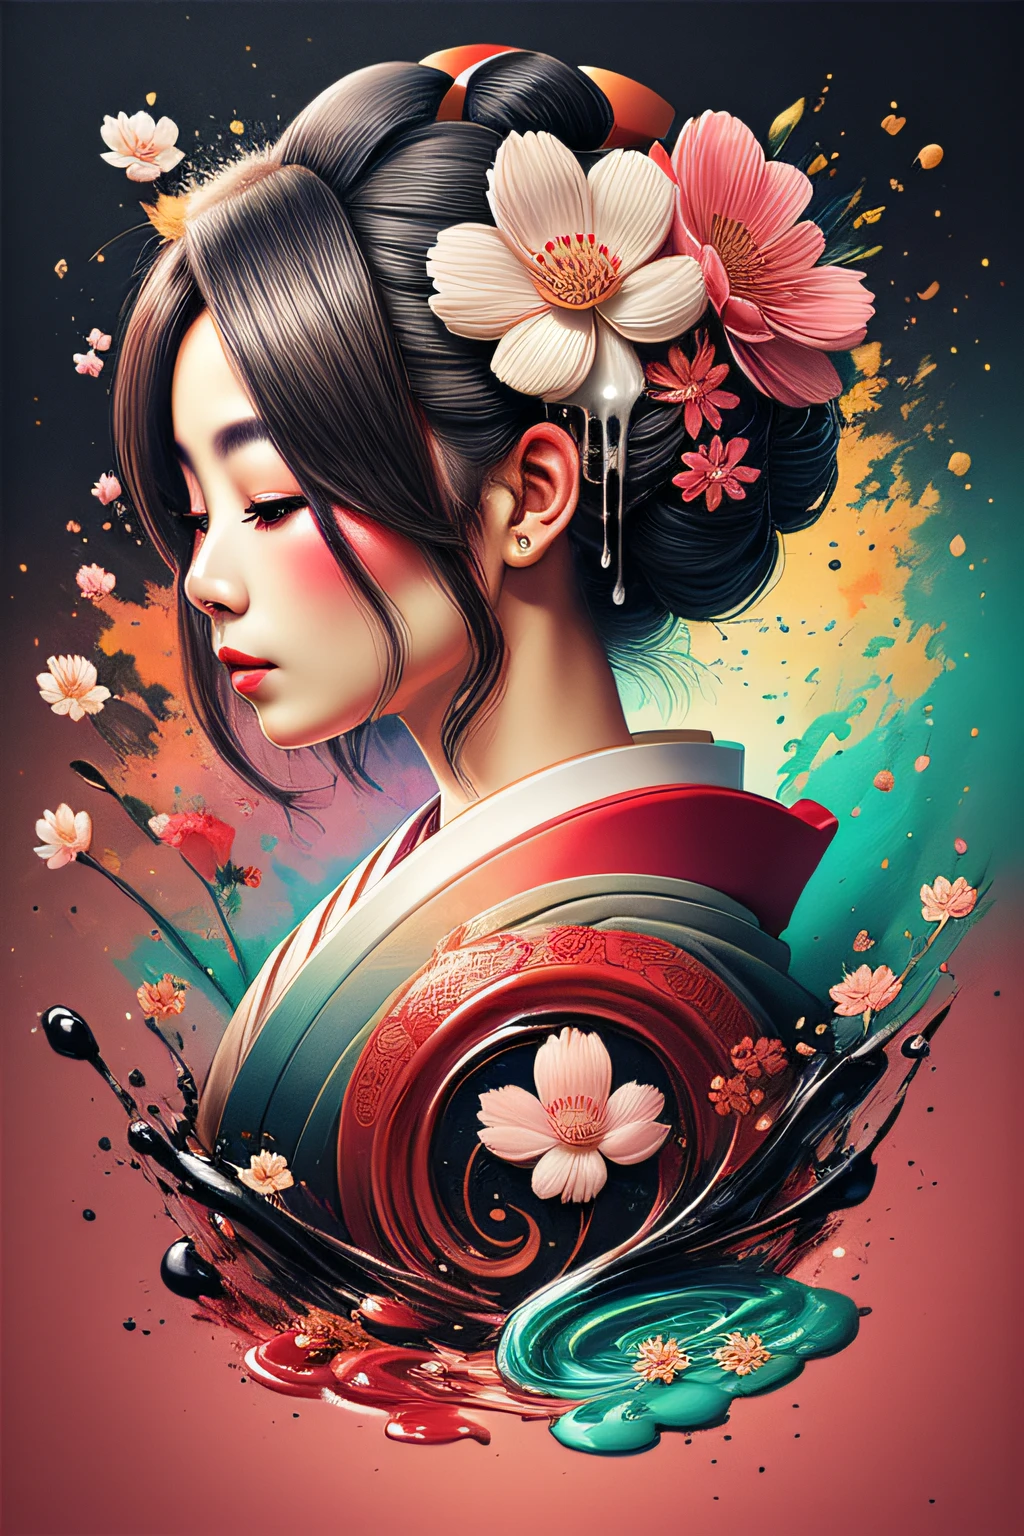 arte de la mancha,colores pasteles(1geisha)gotea,derretir,fondo de flores